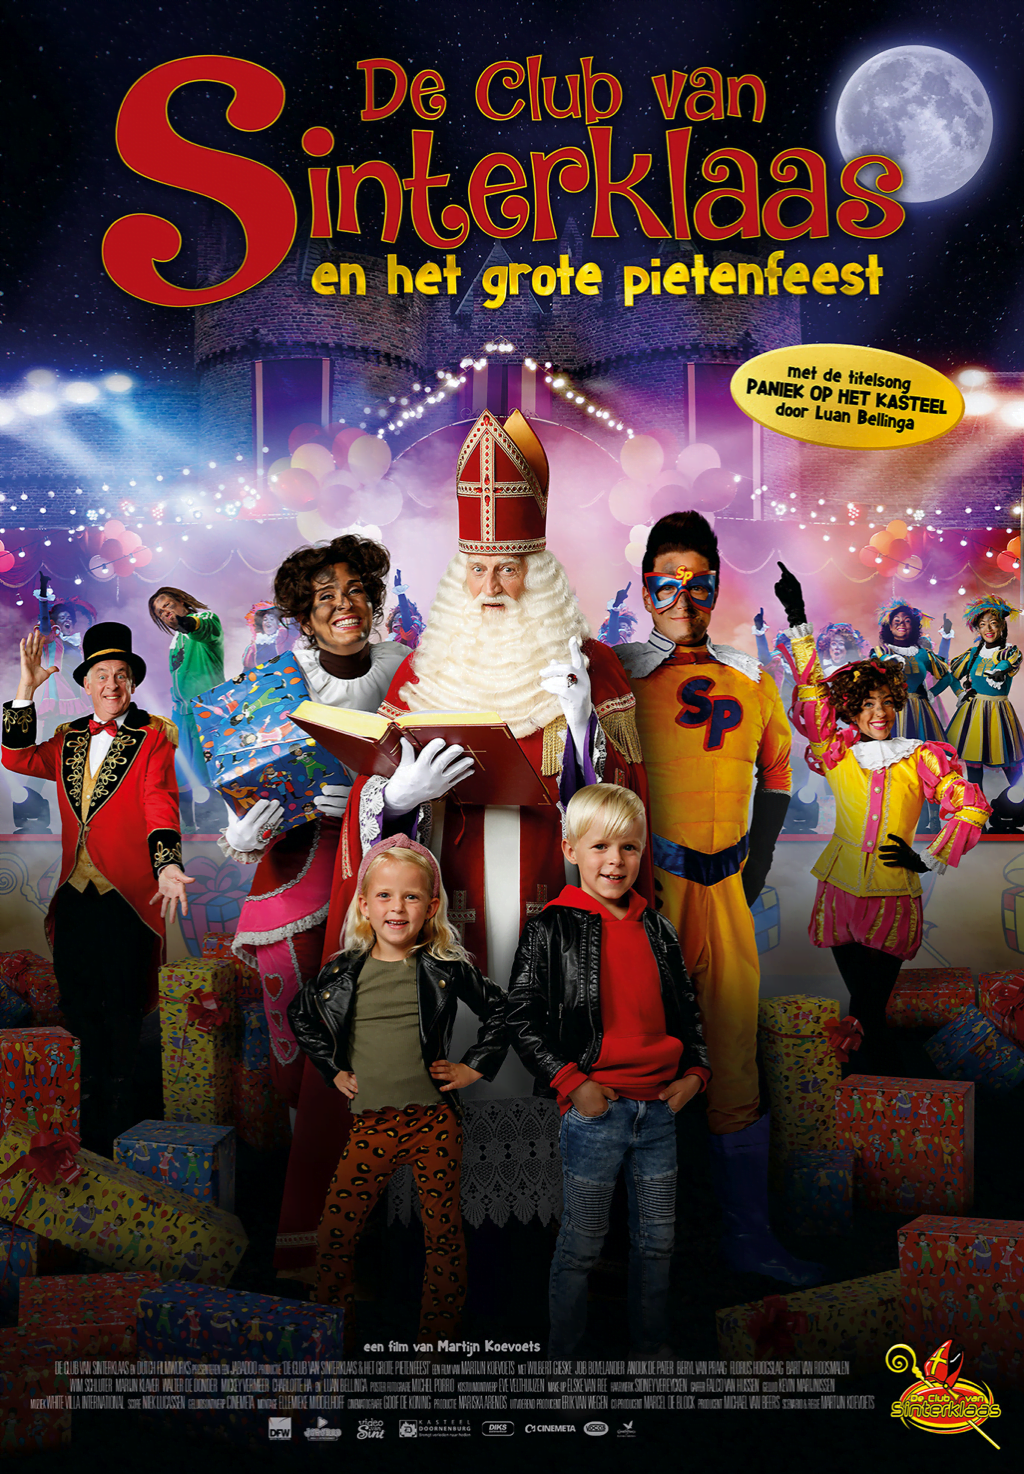 Club van Sinterklaas_film_bioscoop_peuter_mamablogger_